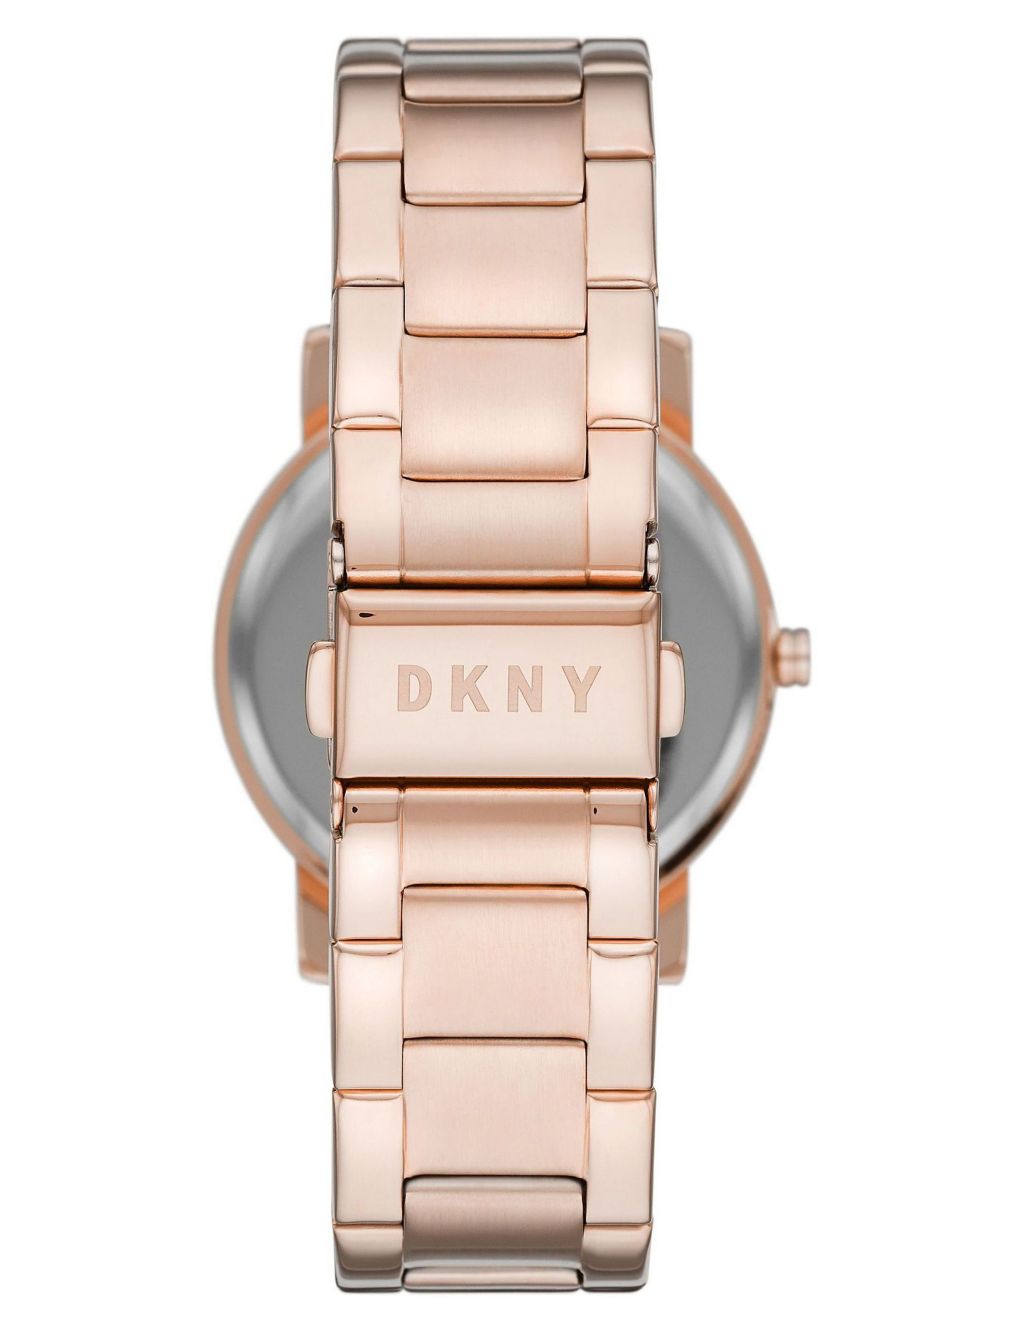 DKNY Soho Rose Gold Metal Watch image 2